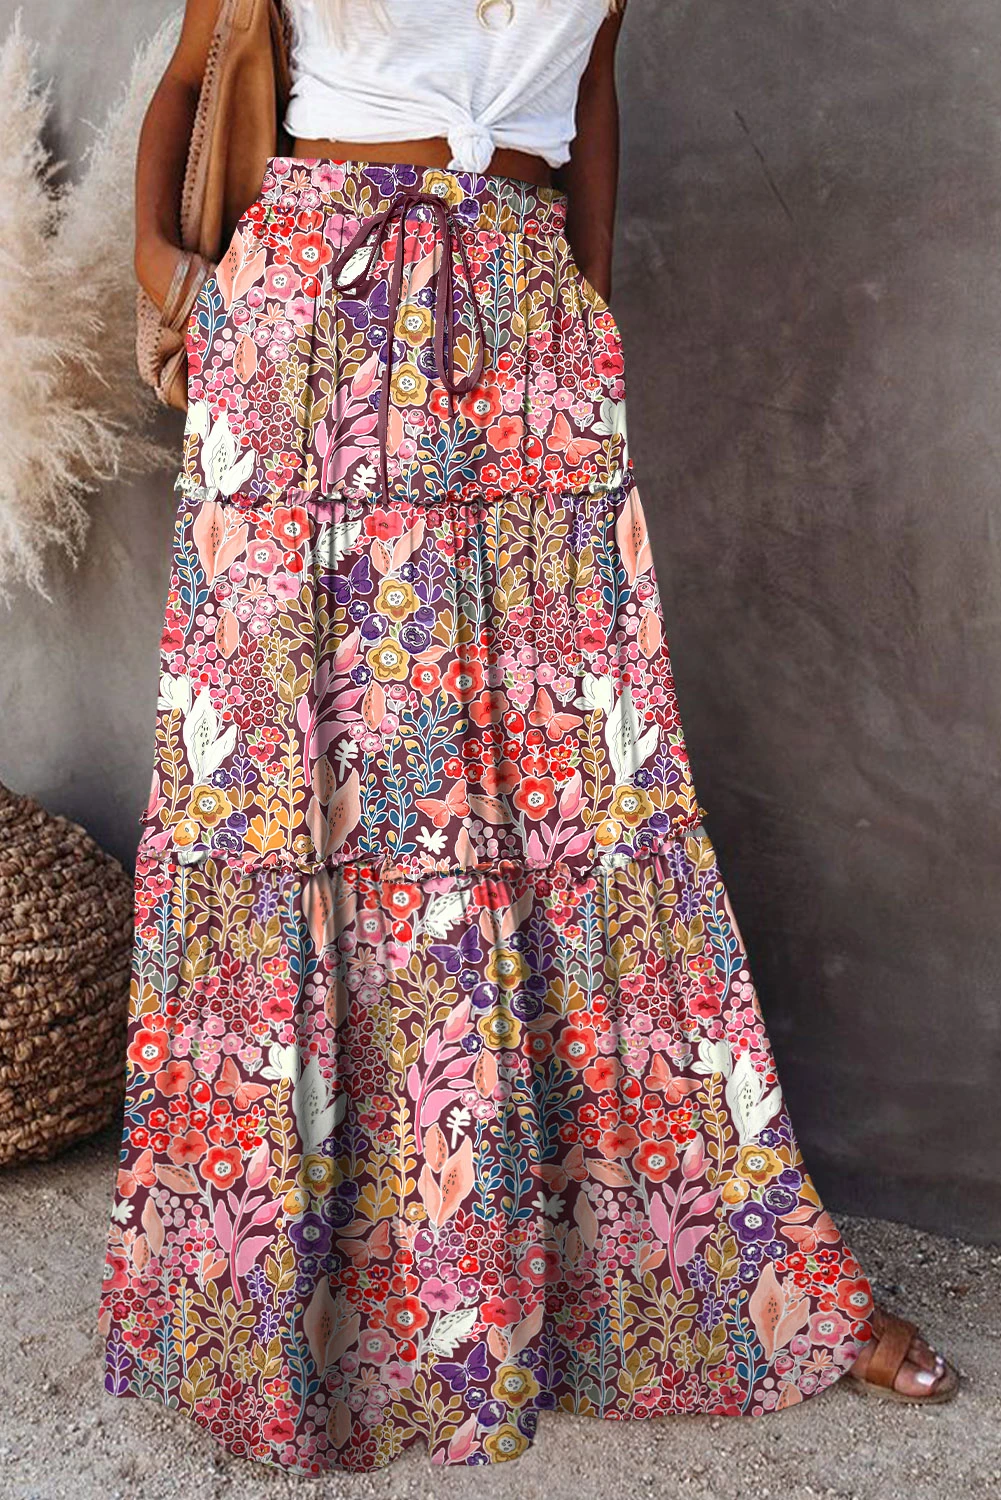 Wholesale & Dropship Multicolor Boho Floral Print High Waist Maxi Skirt